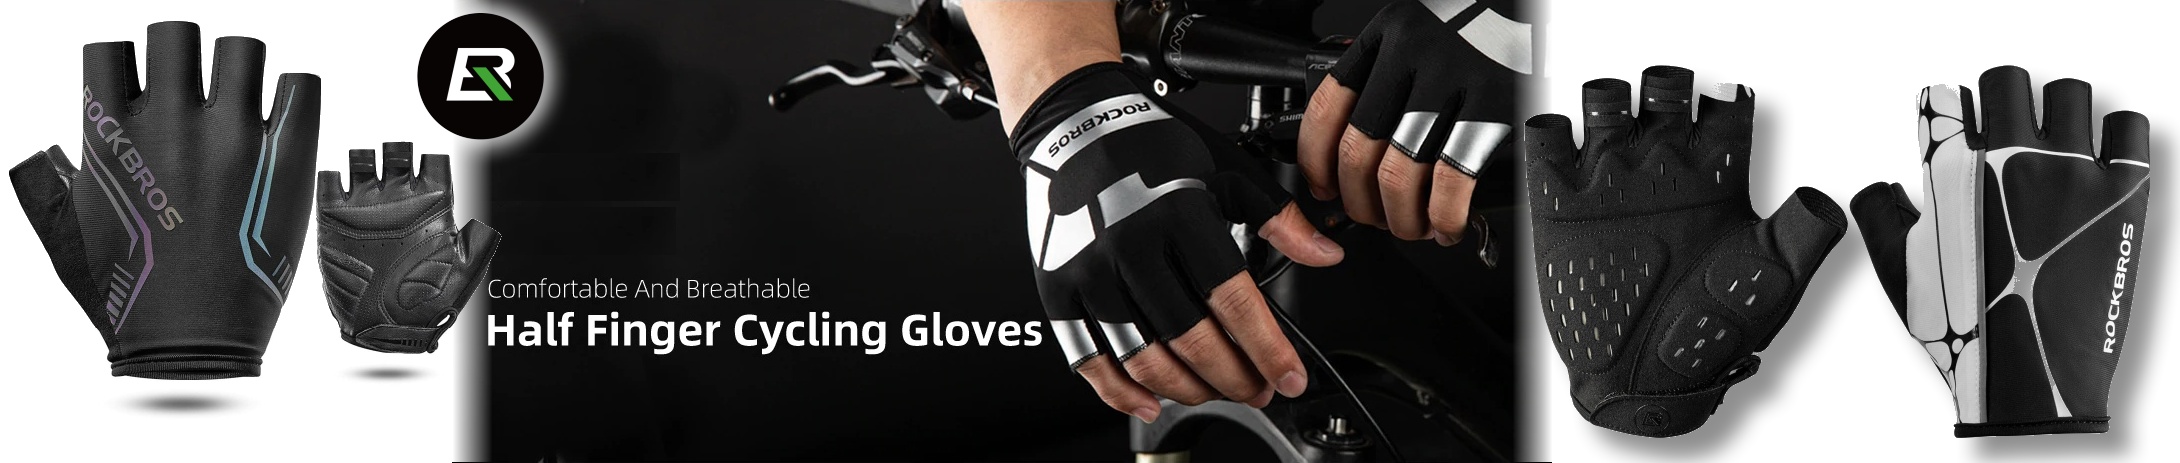 Rockbros Gloves